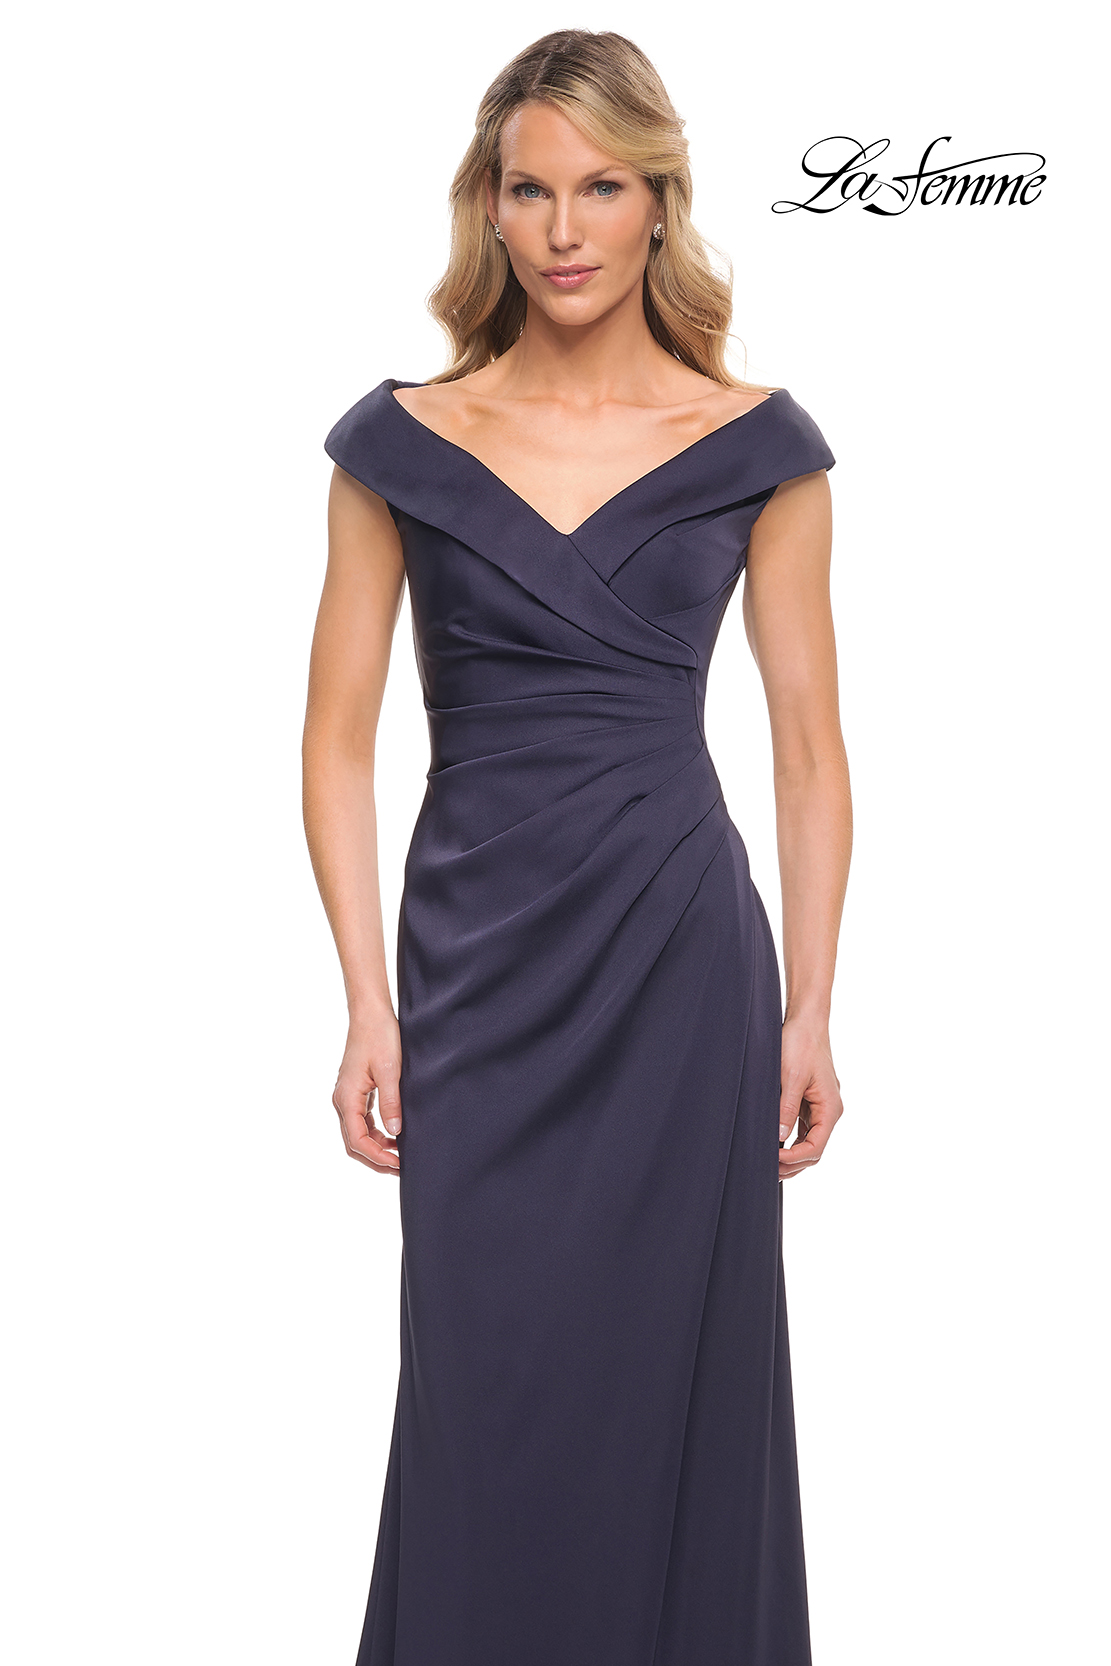 https://www.lafemmefashion.com/sites/default/files/dresses_images/navy-blue-mother-of-the-bride-dress-9-26523.jpg